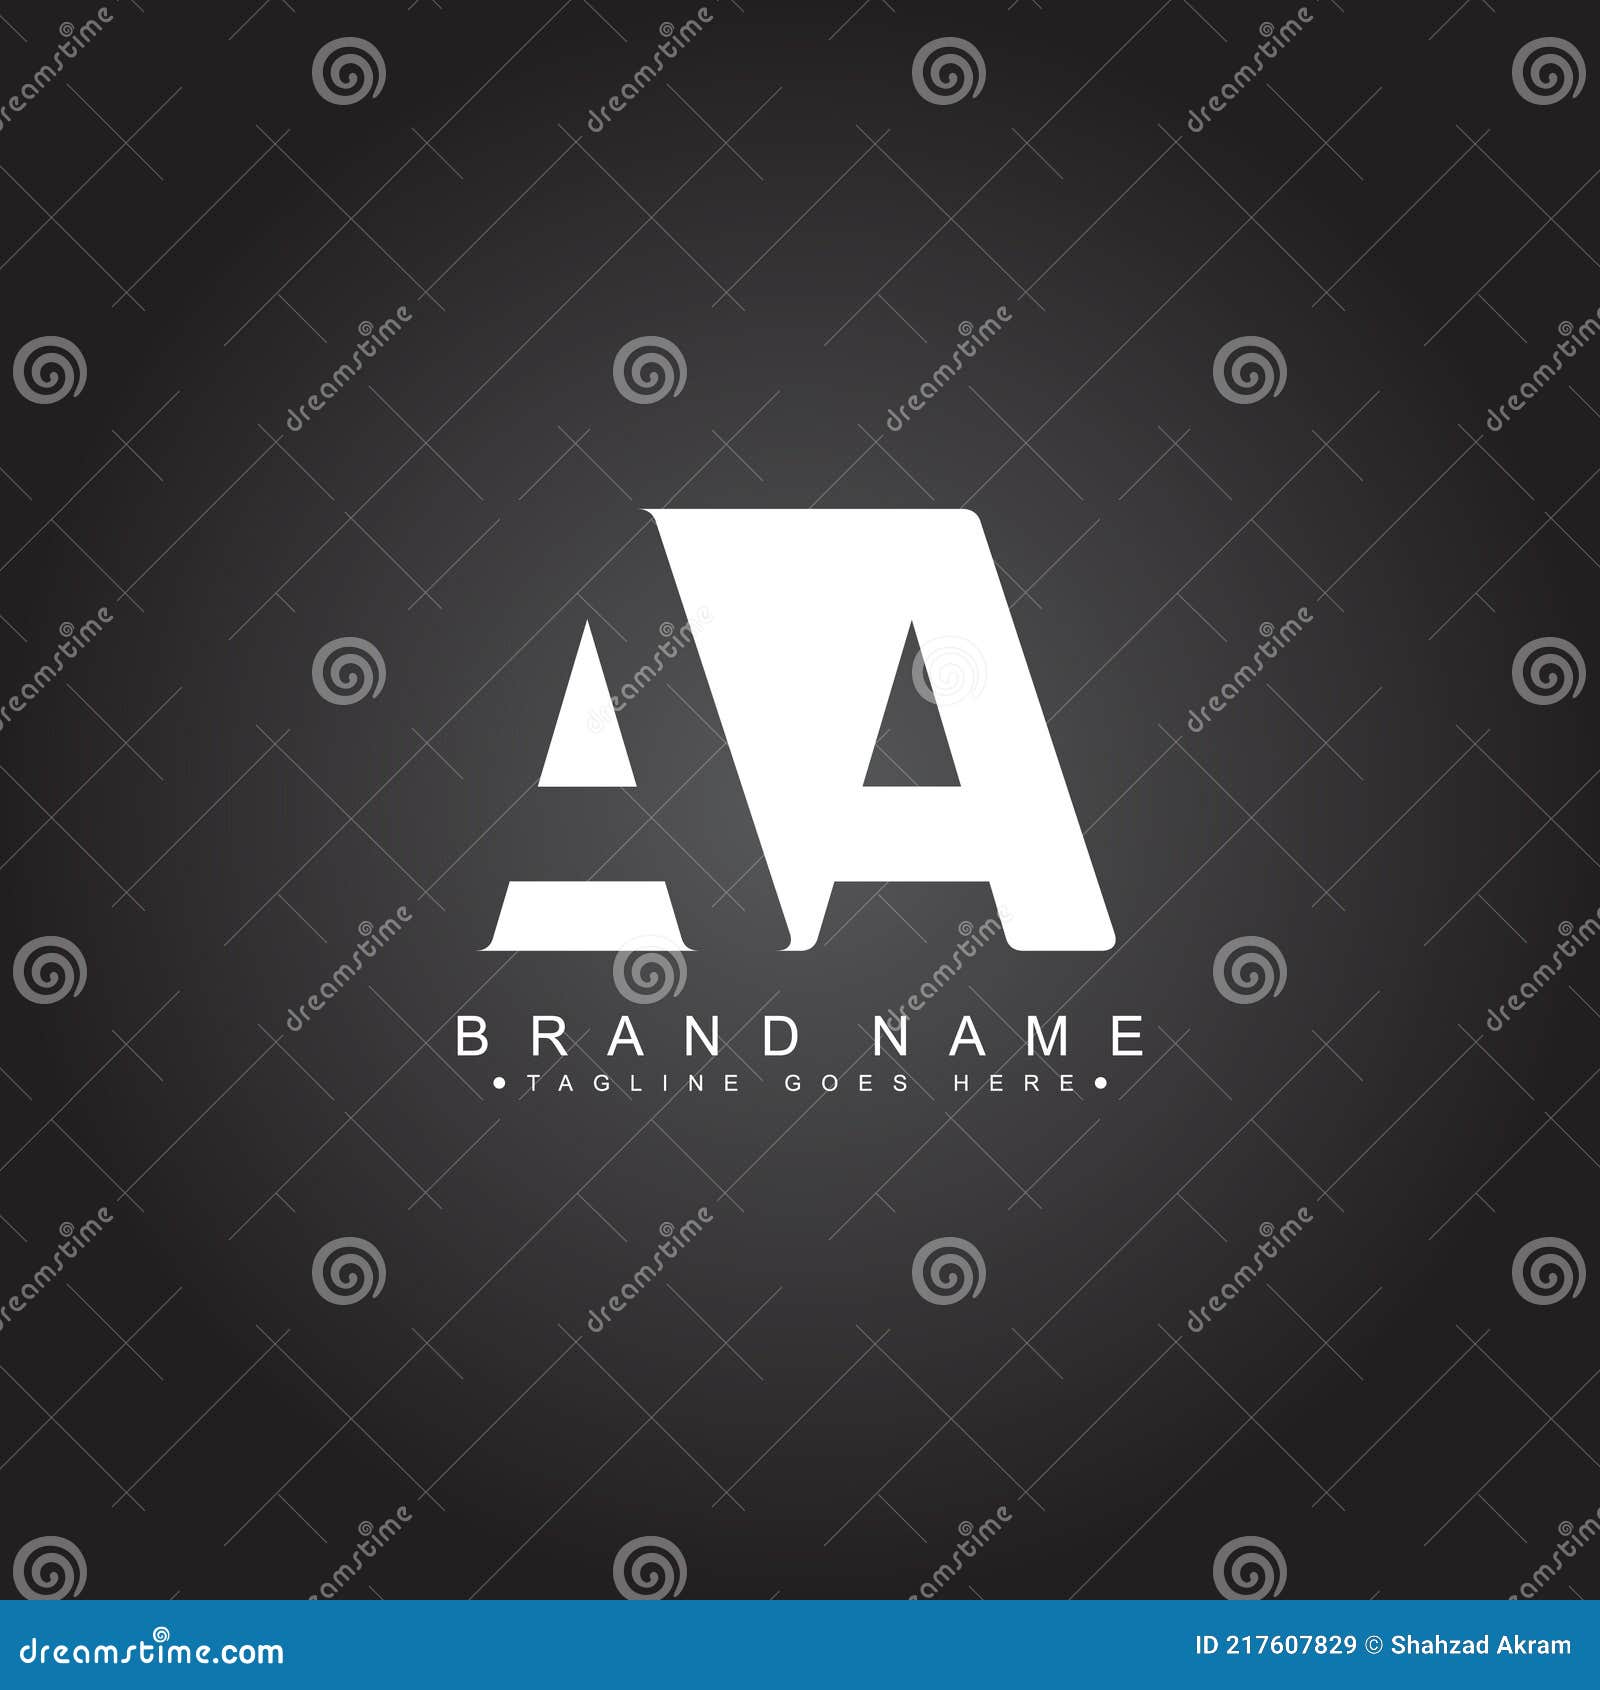 initial letter aa logo - minimal business logo